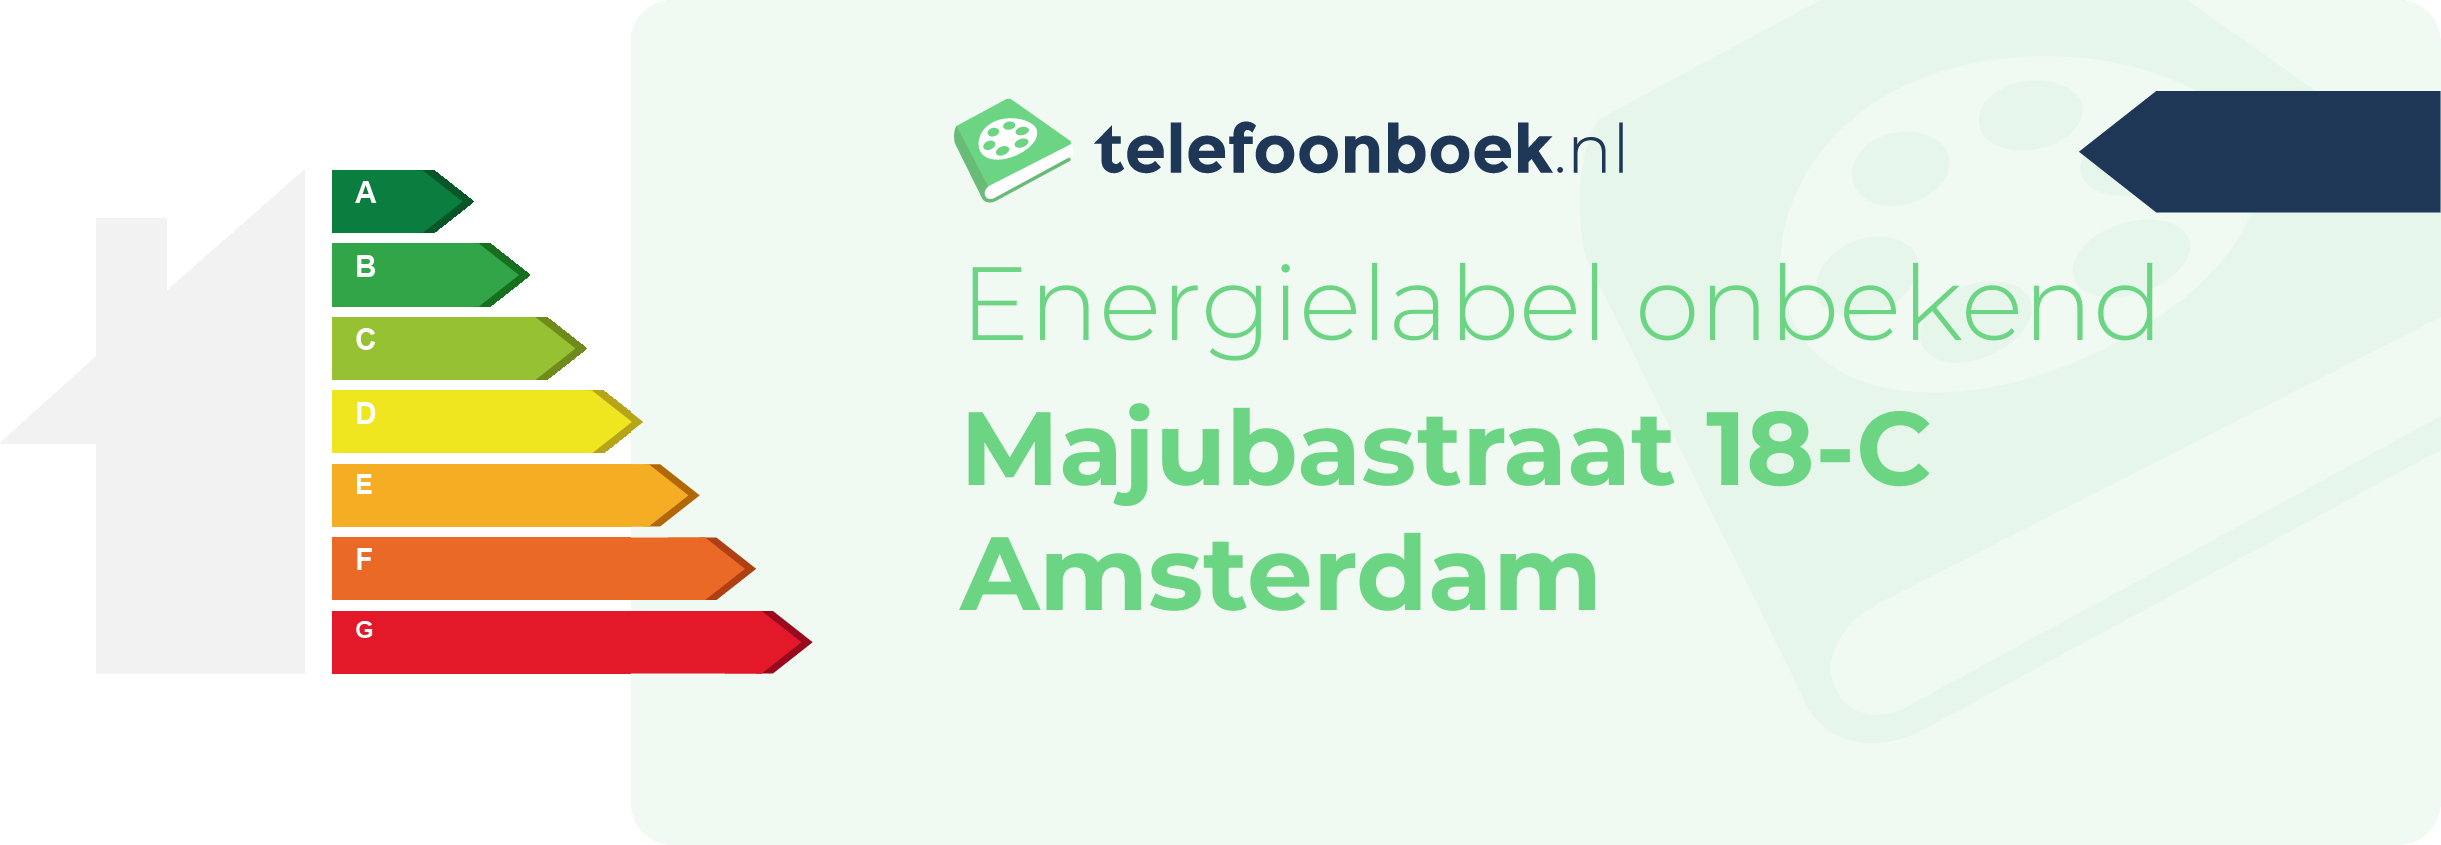 Energielabel Majubastraat 18-C Amsterdam